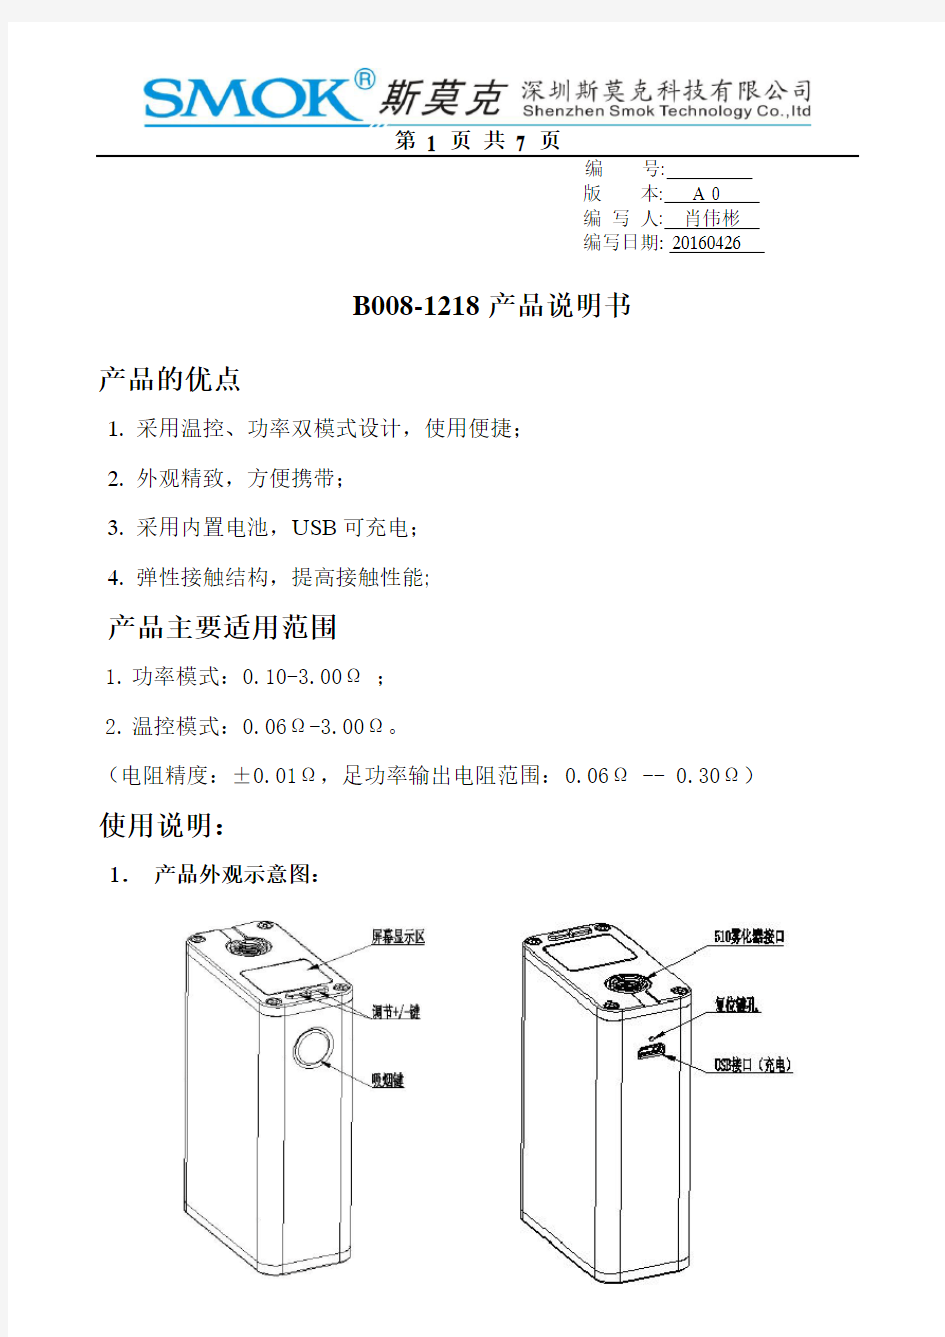 SMOK电子烟——B008-1218产品说明书